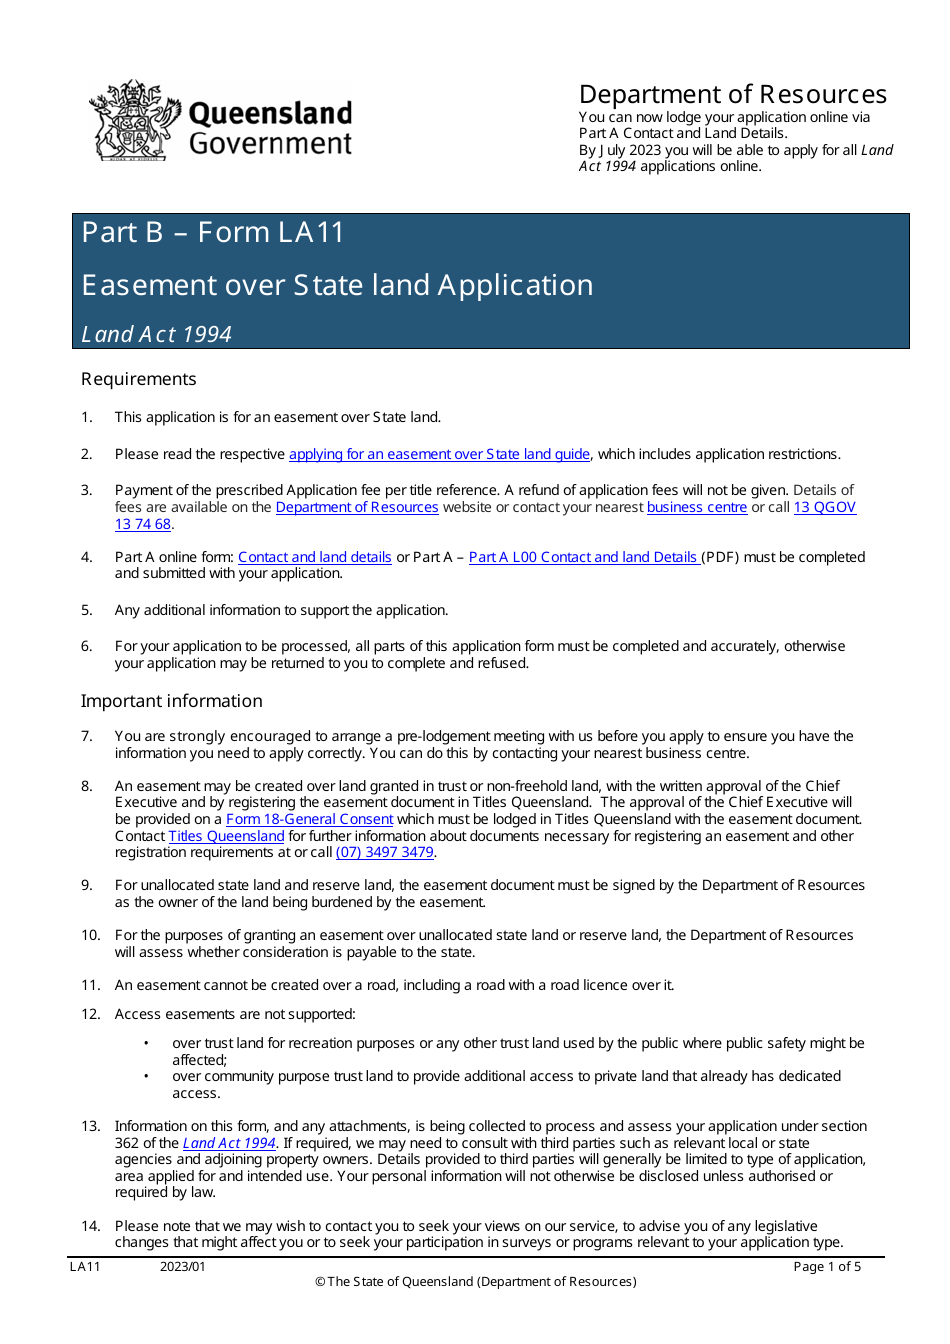 Form LA11 Part B Easement Over State Land Application - Queensland, Australia, Page 1